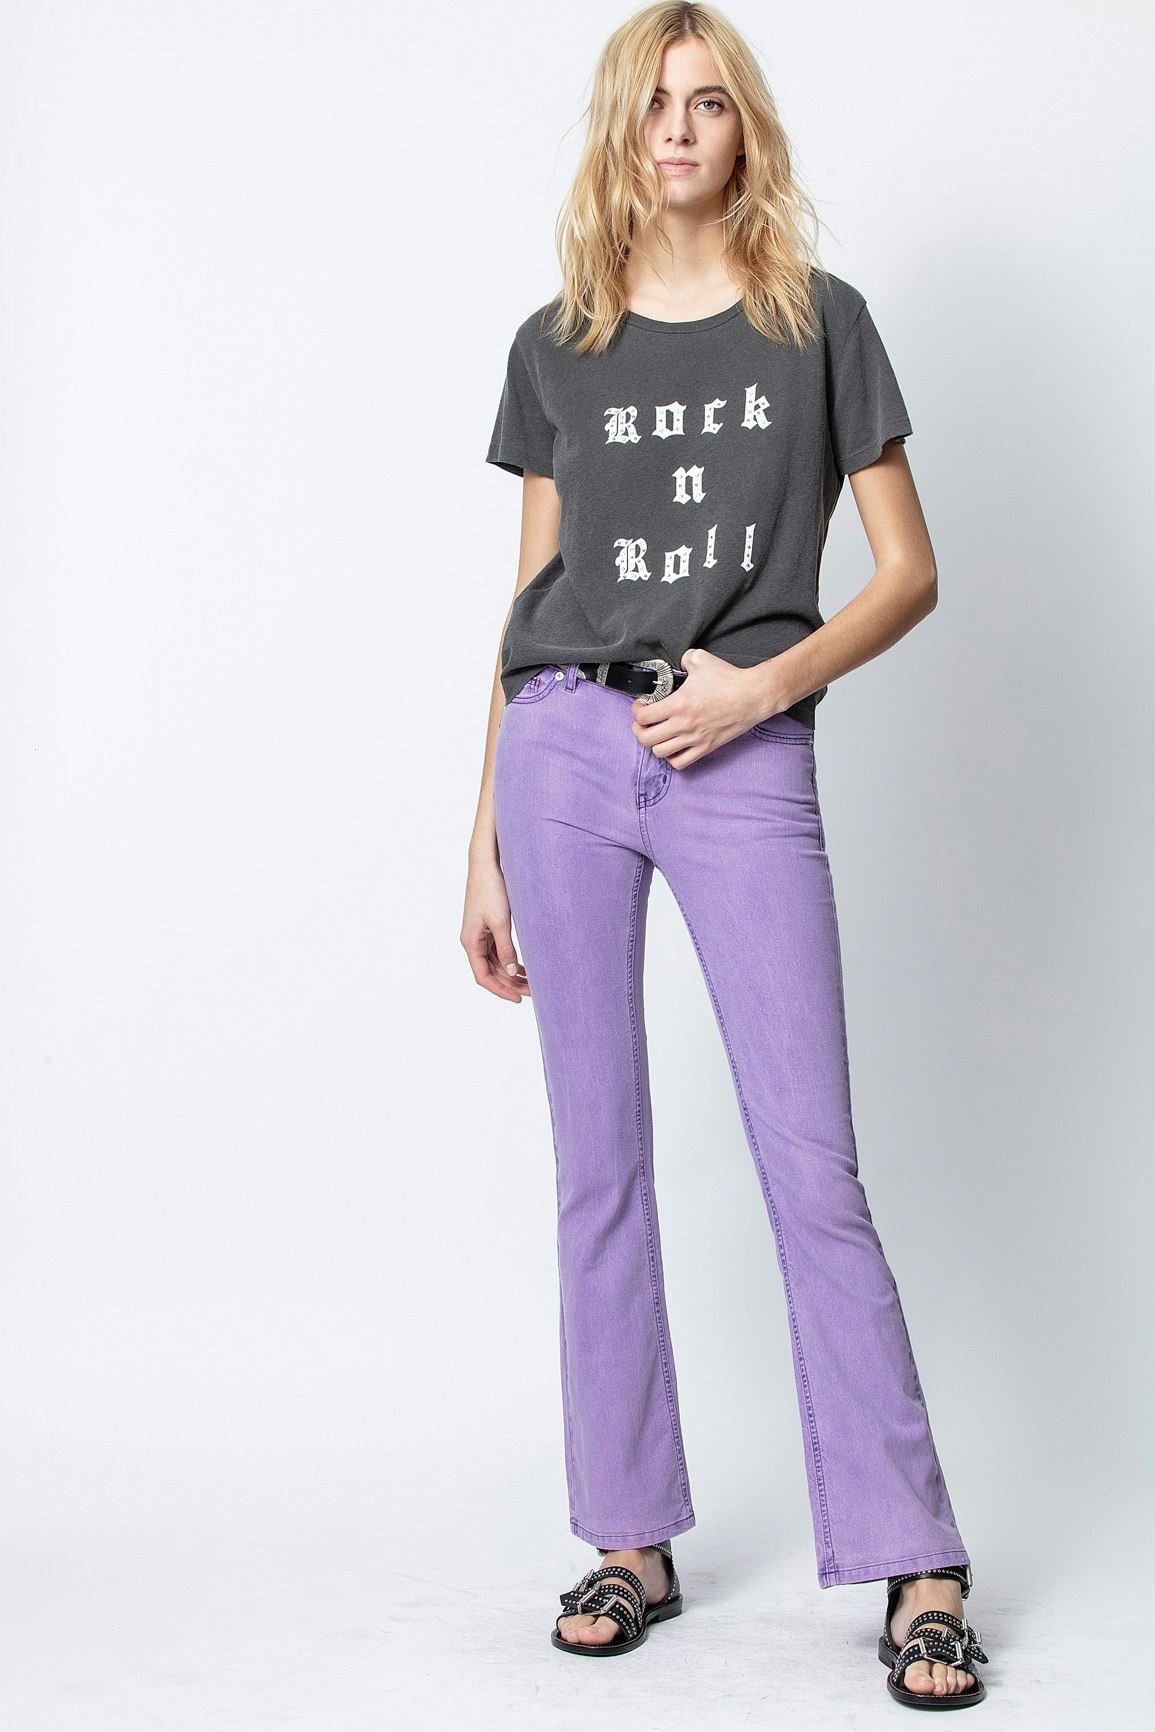 Zadig /& Voltaire Womens Alys Rock Roll Strass T-Shirt